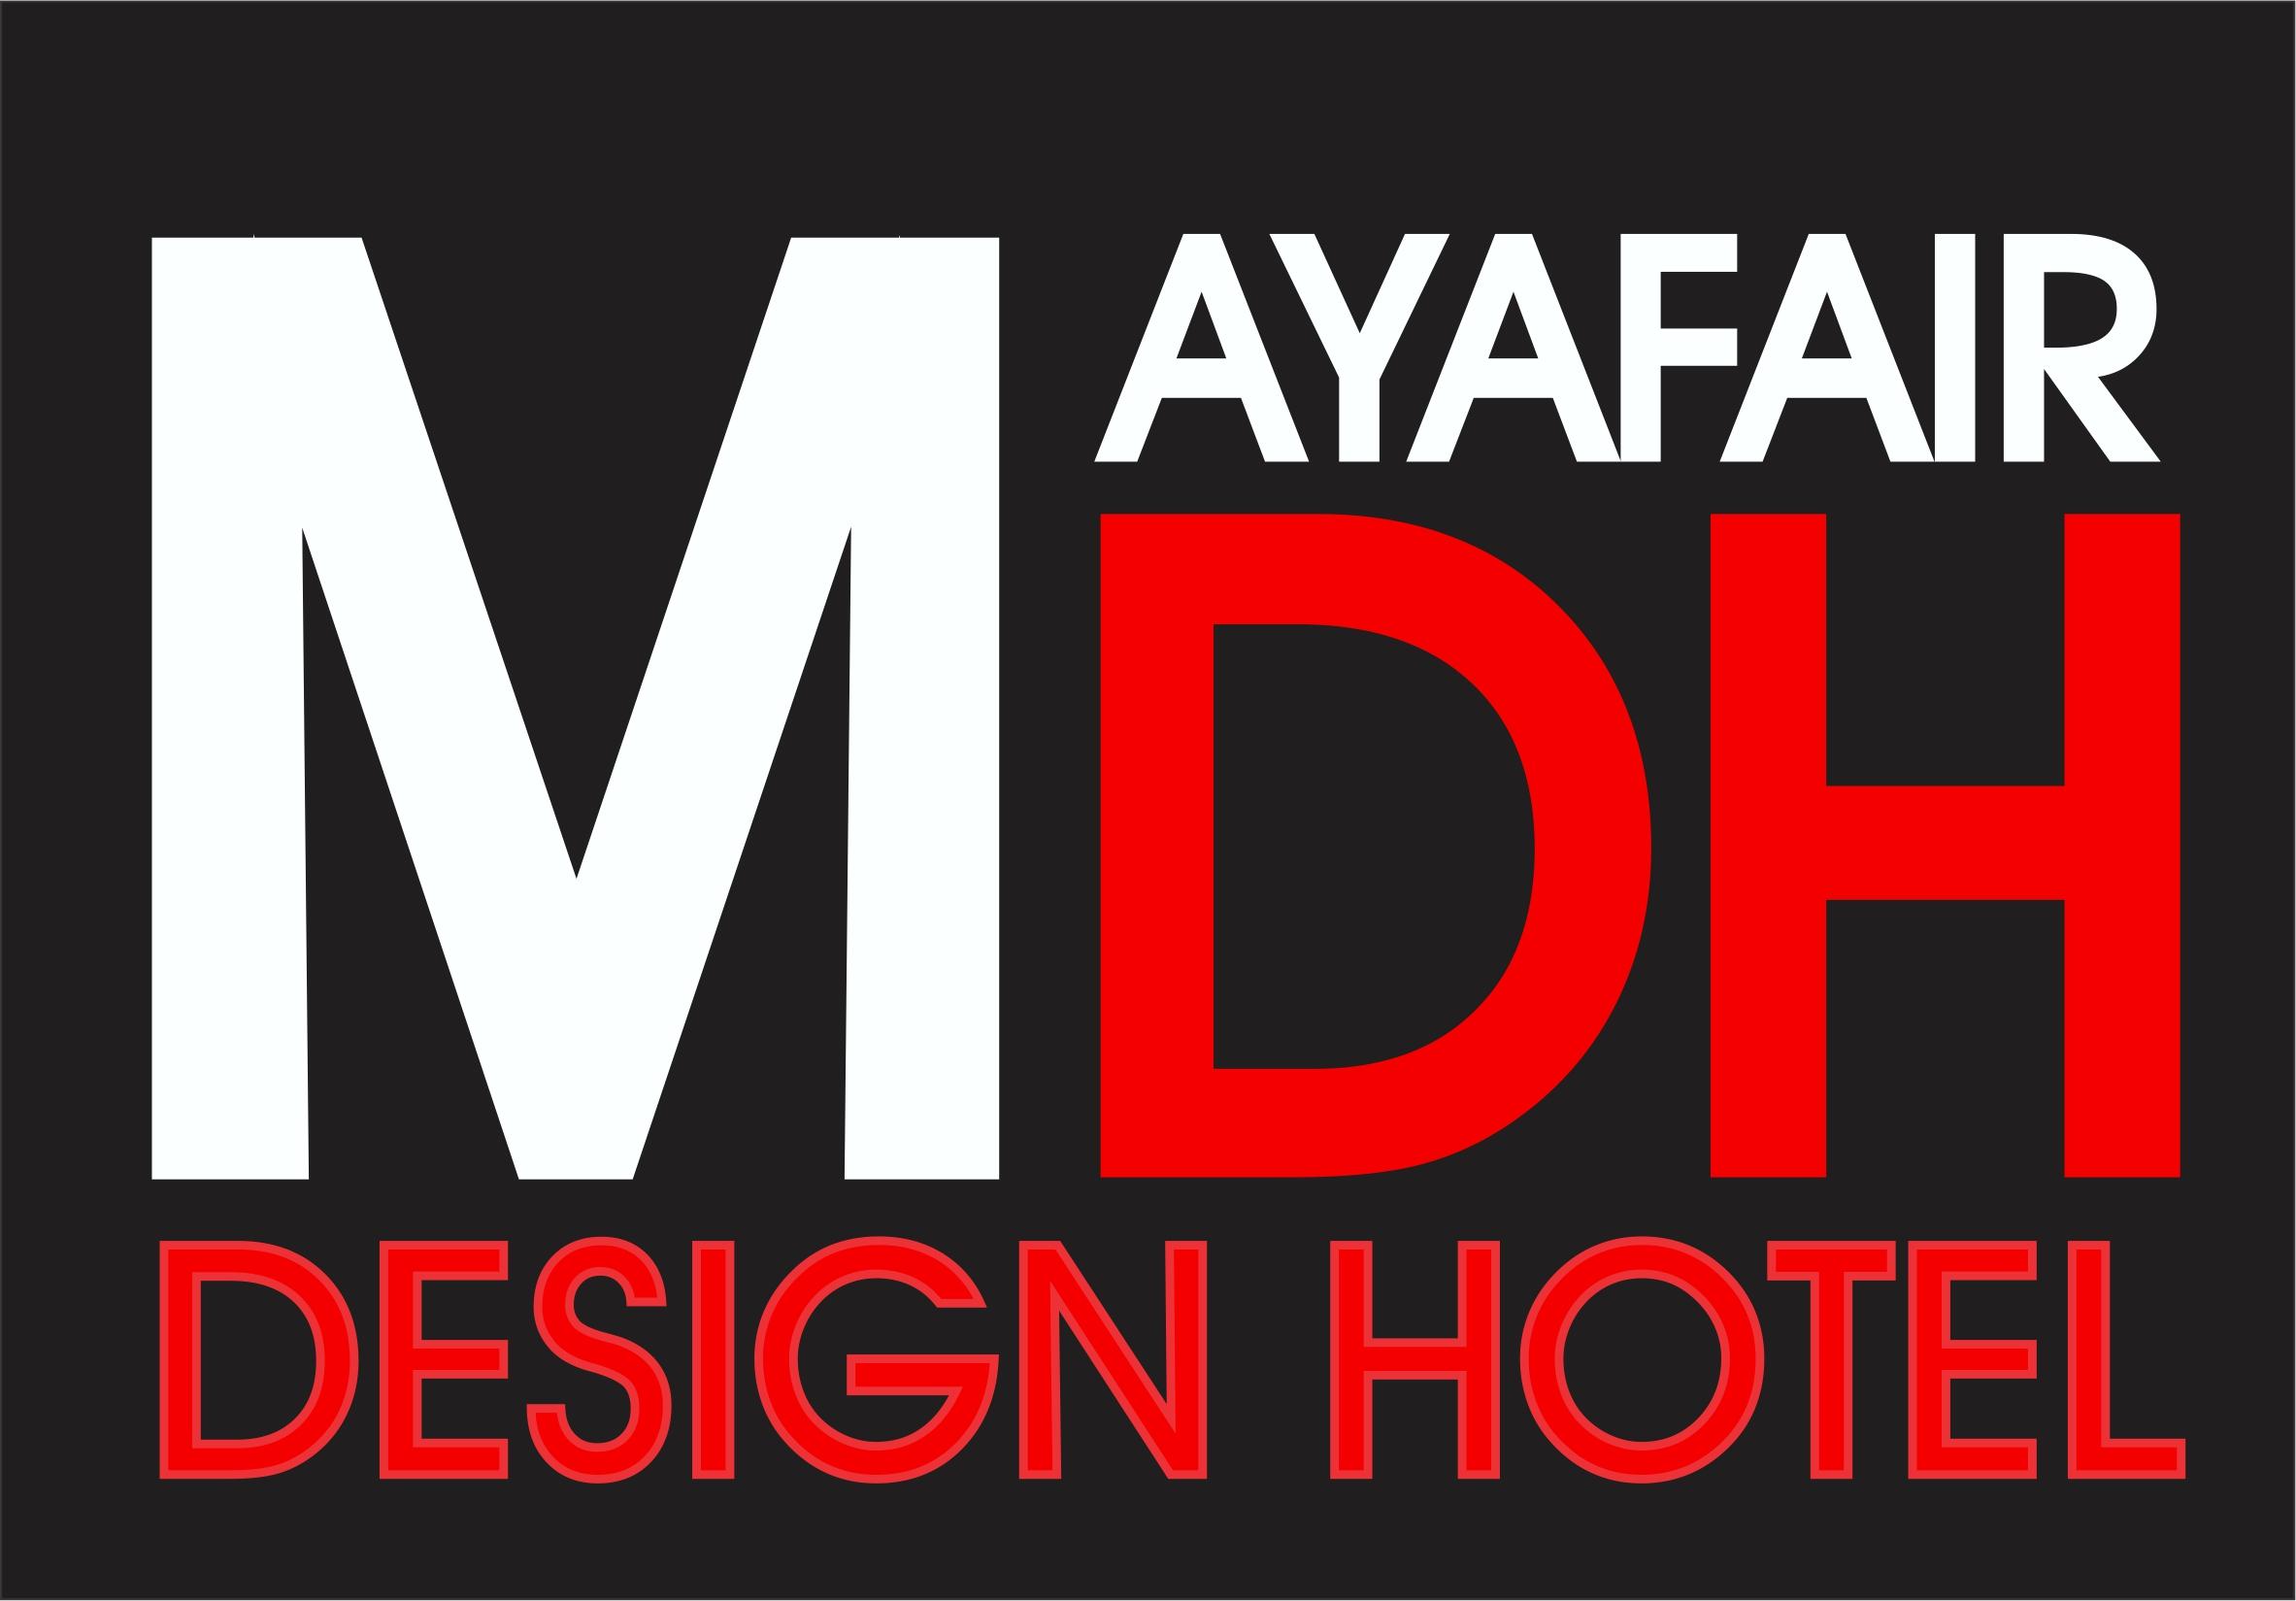 Mayafair Design Hotel